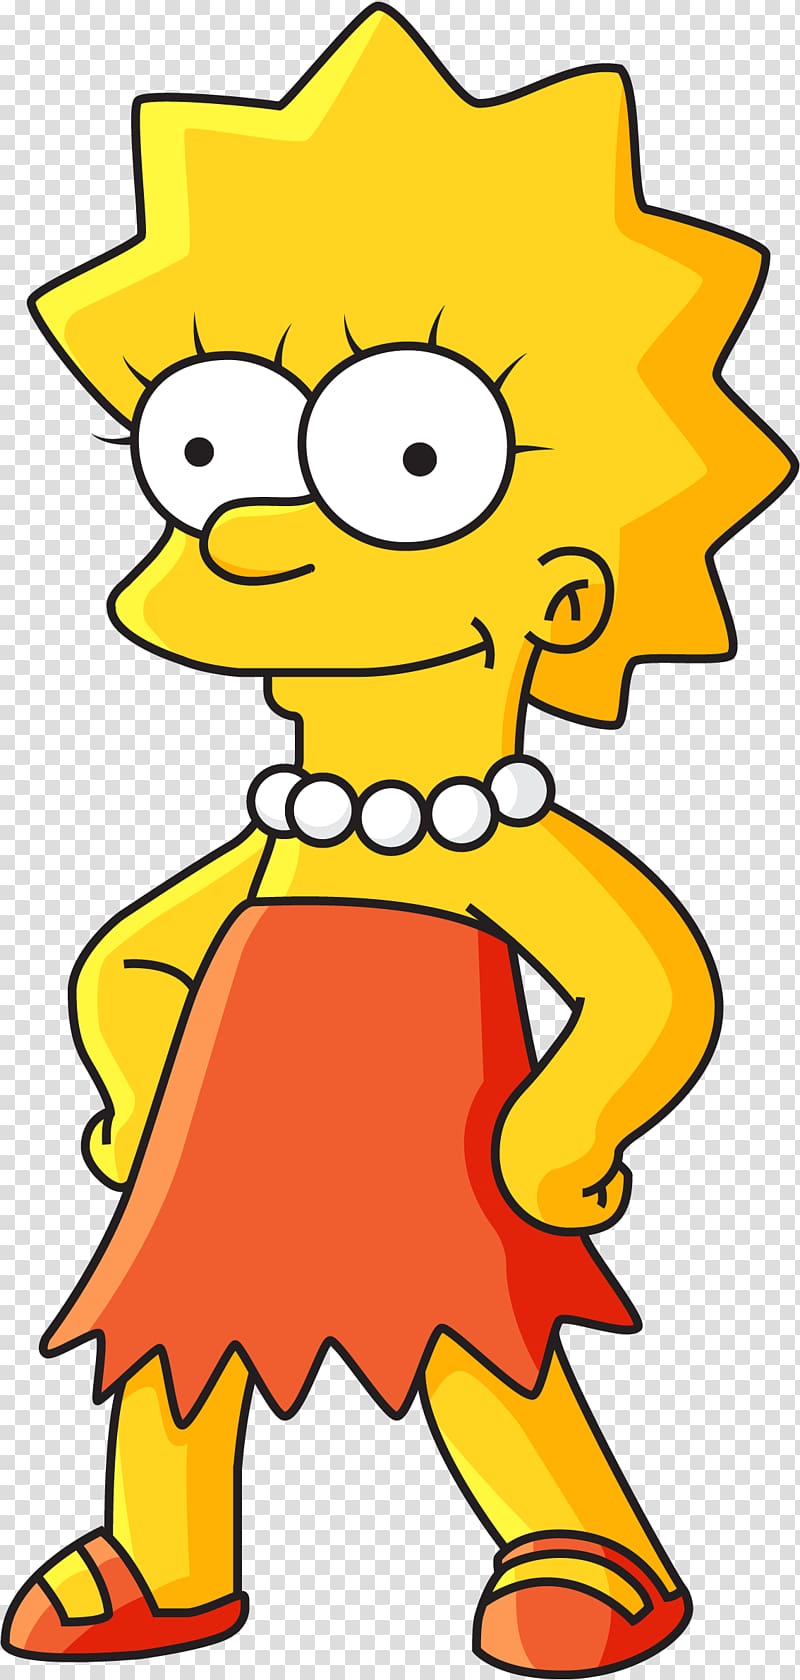 Lisa Simpson Homer Simpson Bart Simpson Maggie Simpson Marge Simpson, Bart Simpson transparent background PNG clipart